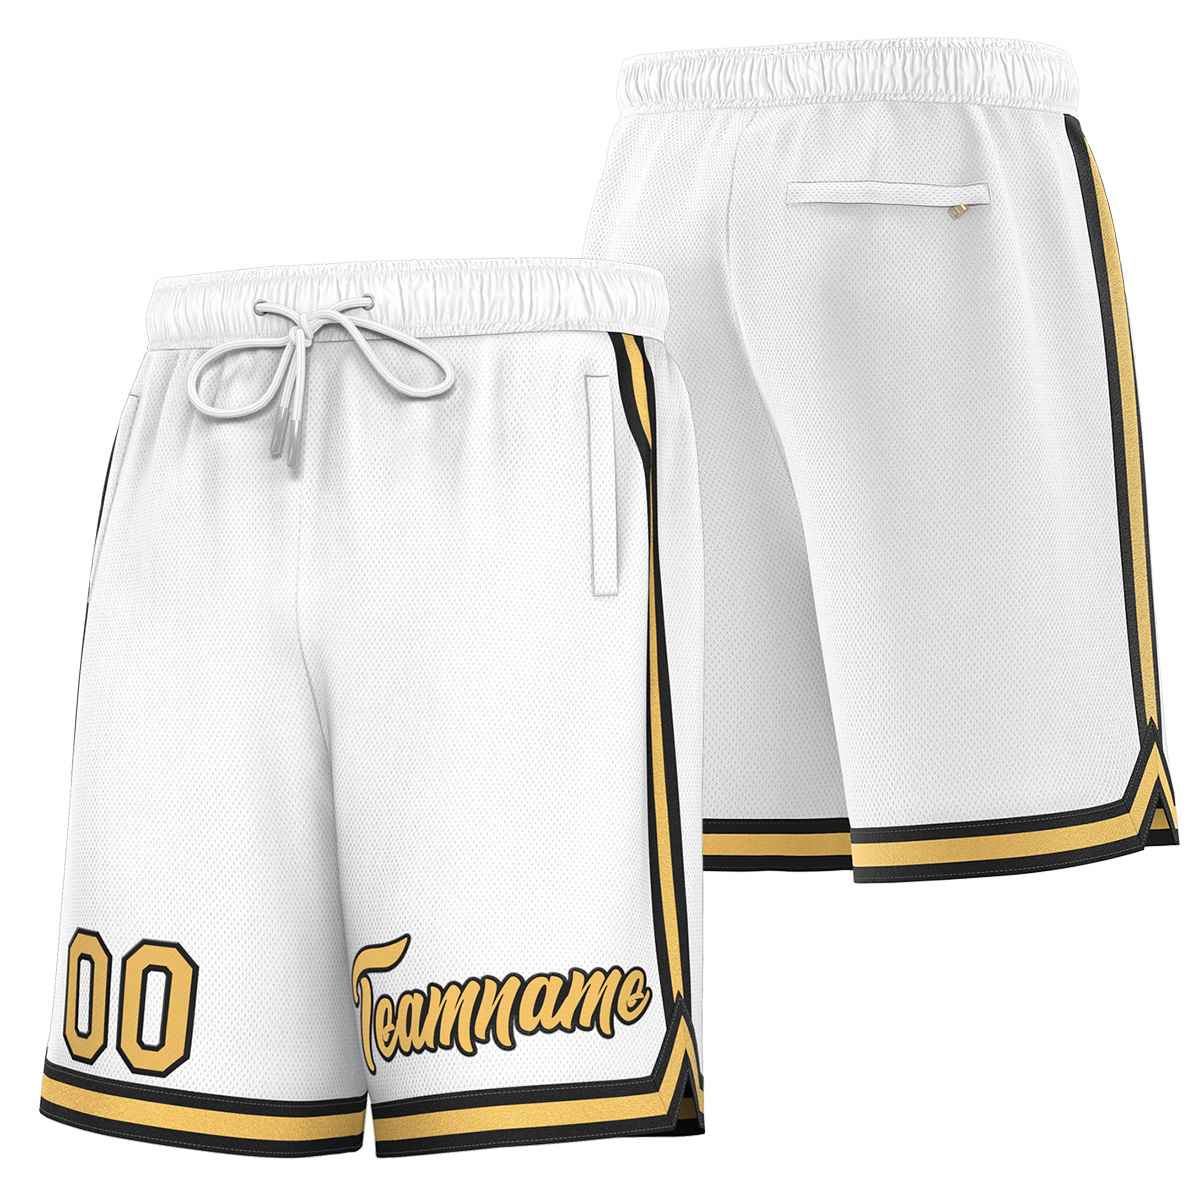 kxk custom white basketball shorts